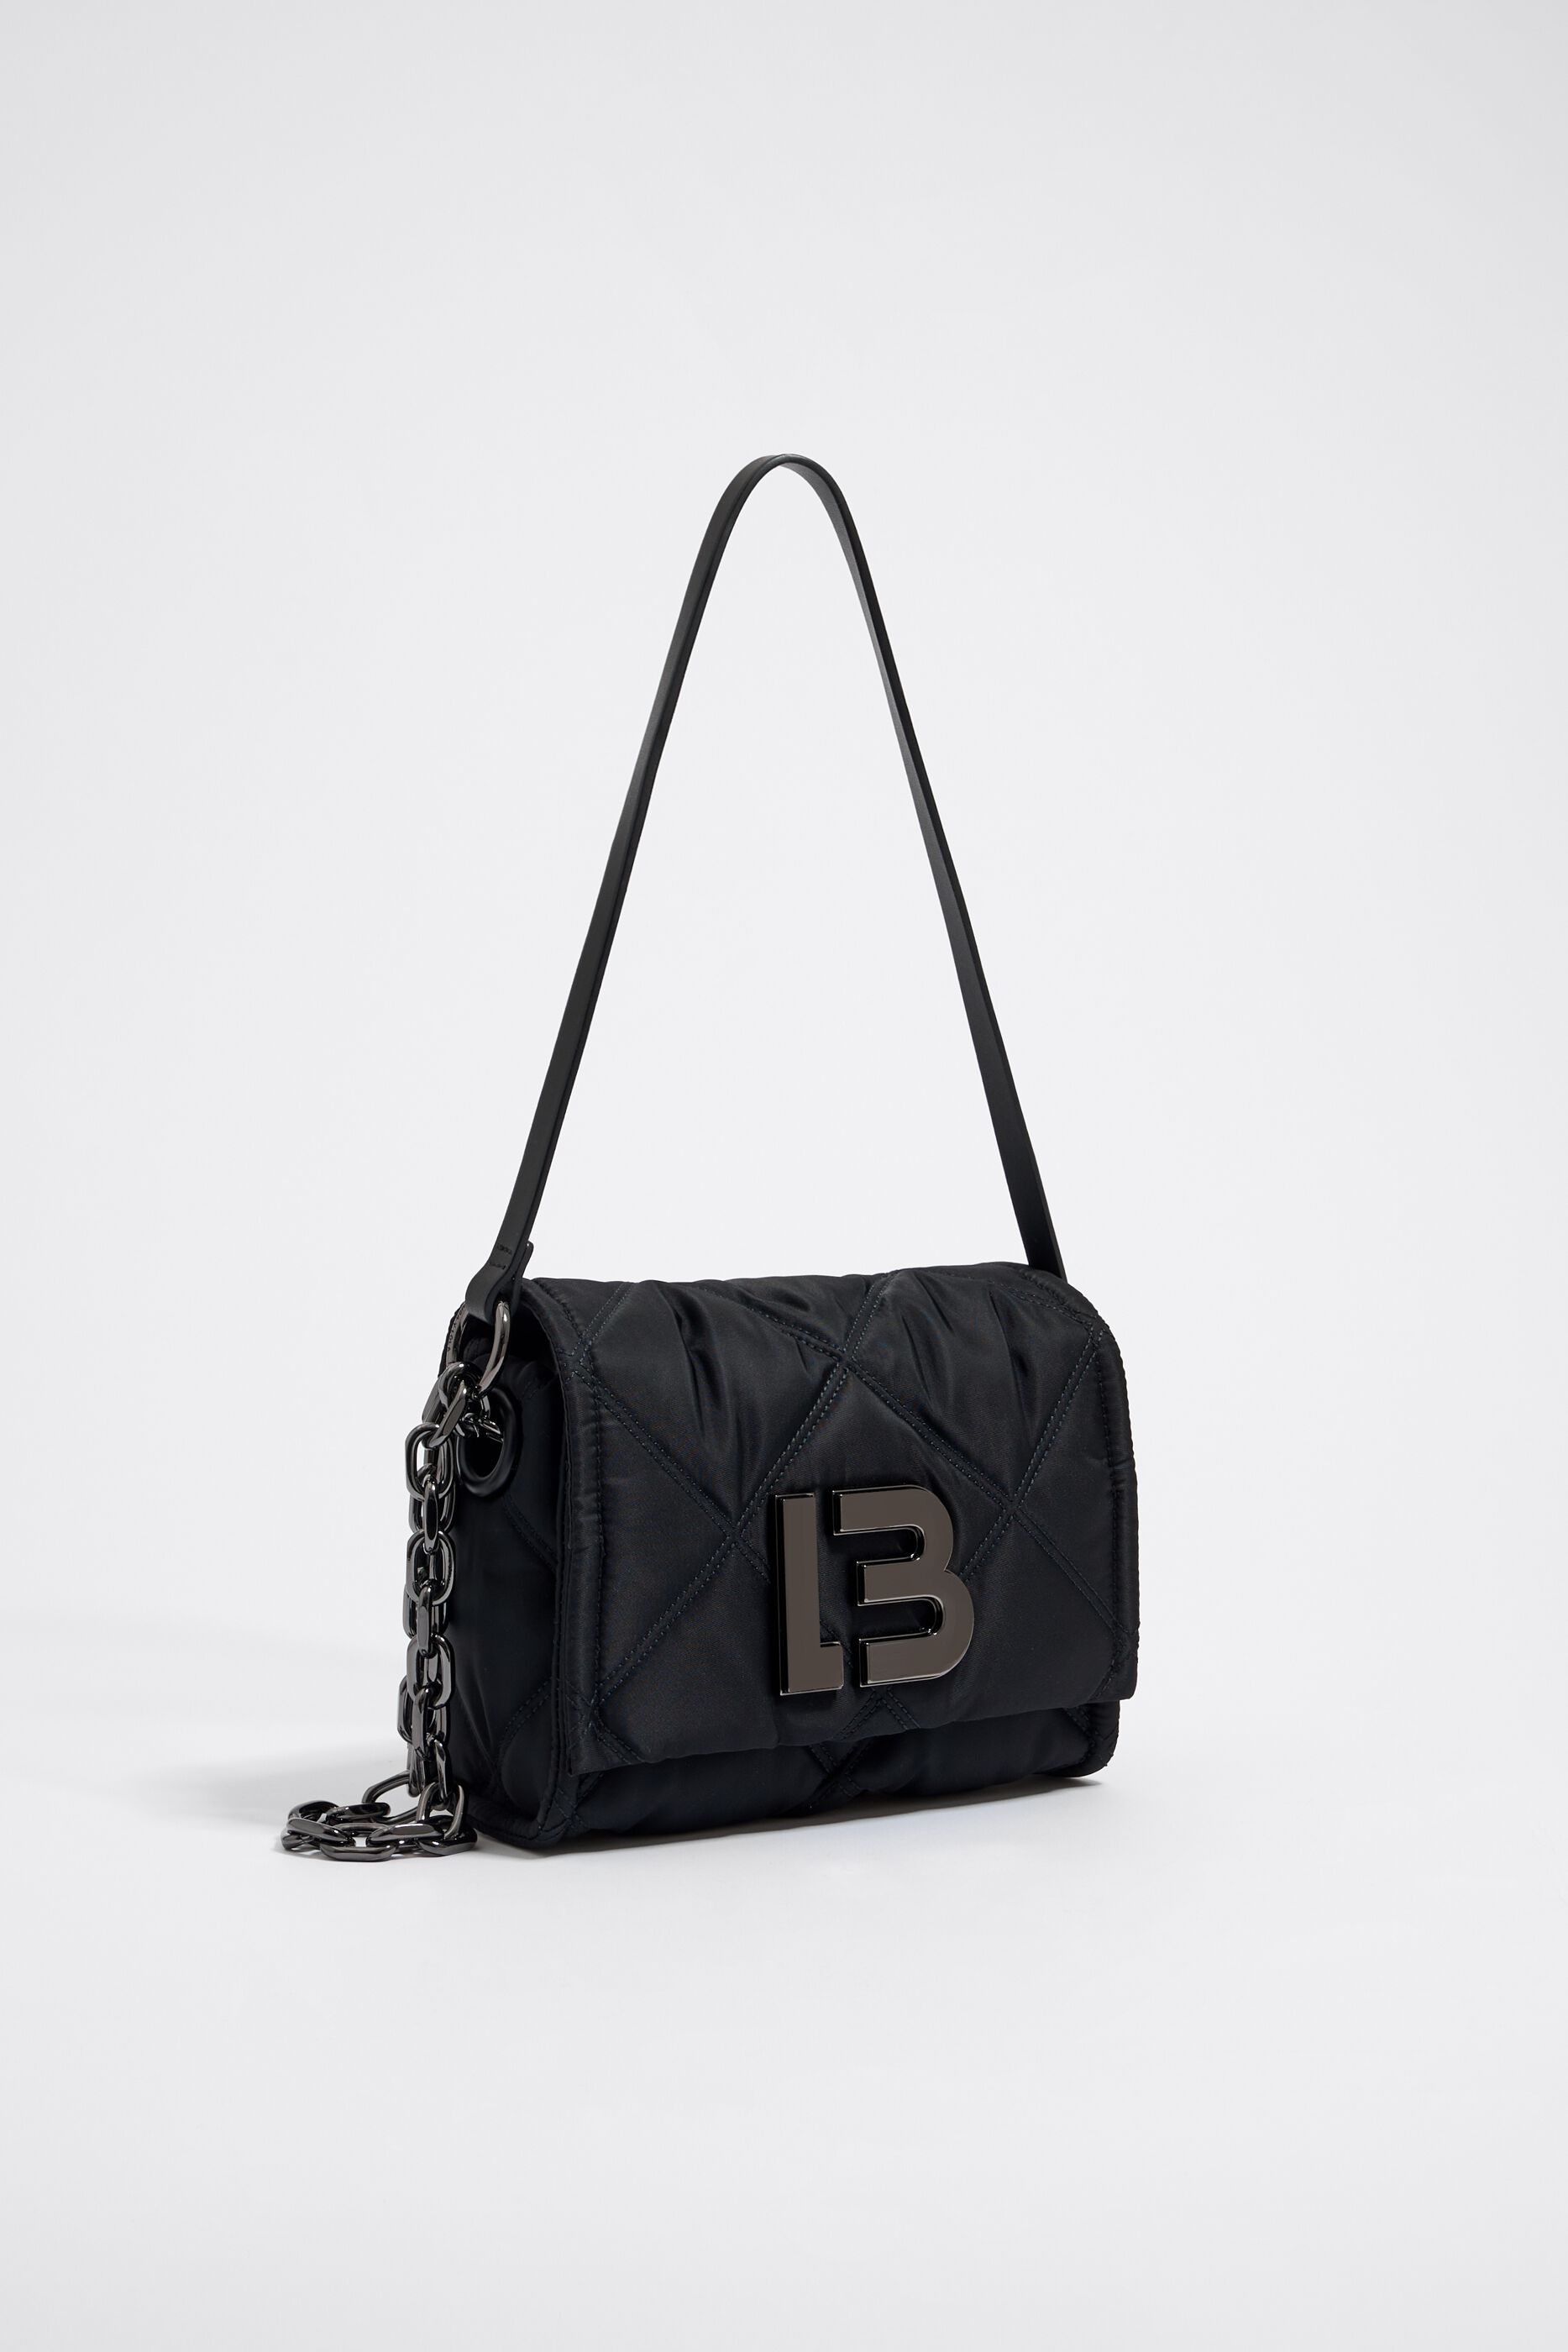 Small black crossbody bag